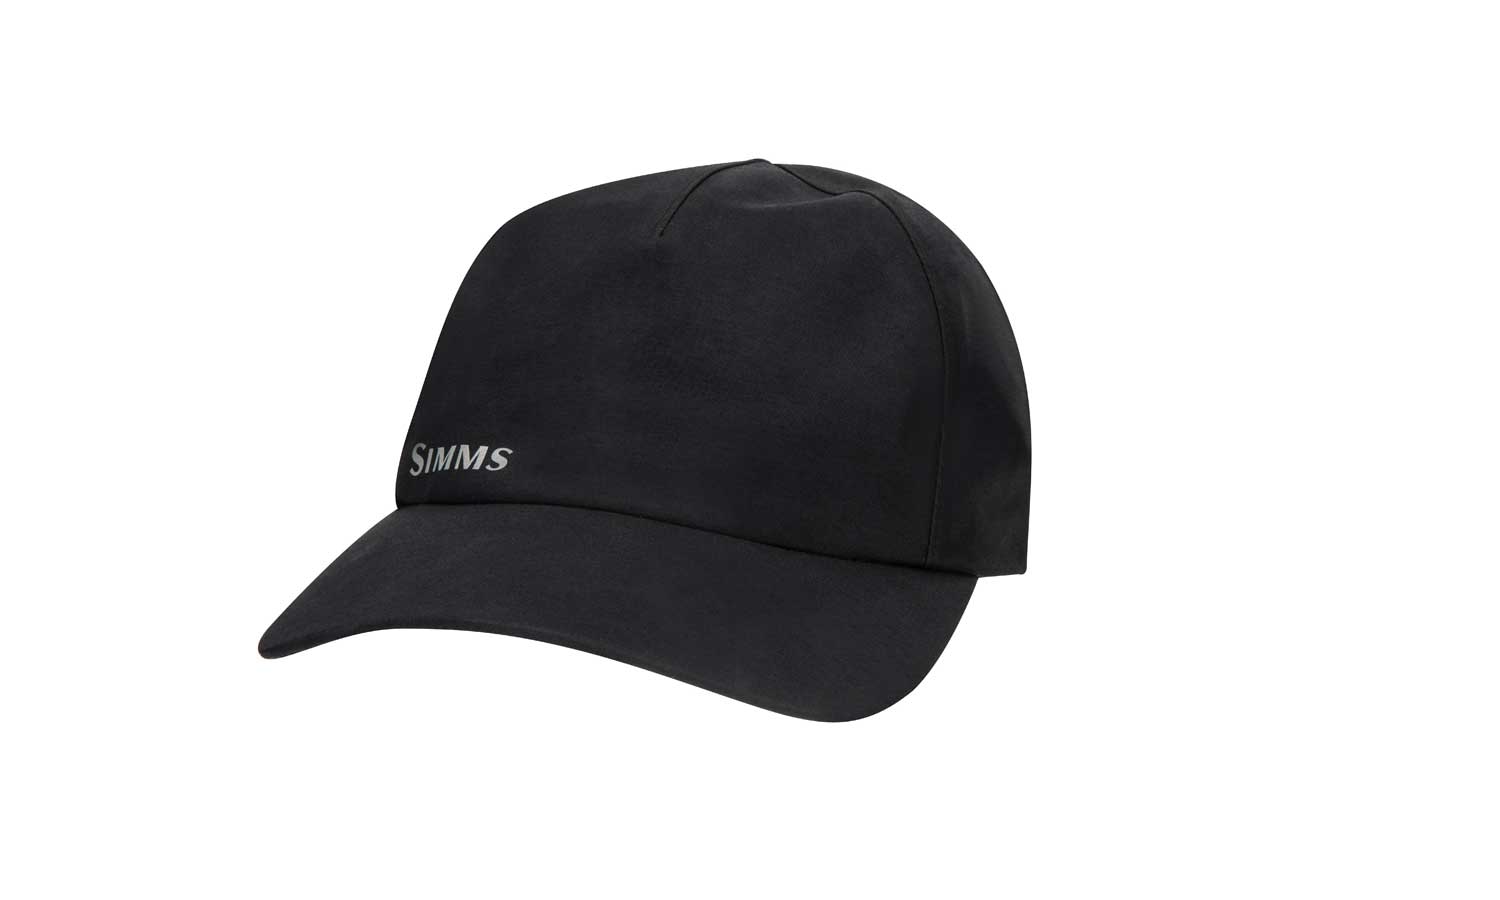 Simms Gore-Tex Rain Cap - Black - Size L/XL